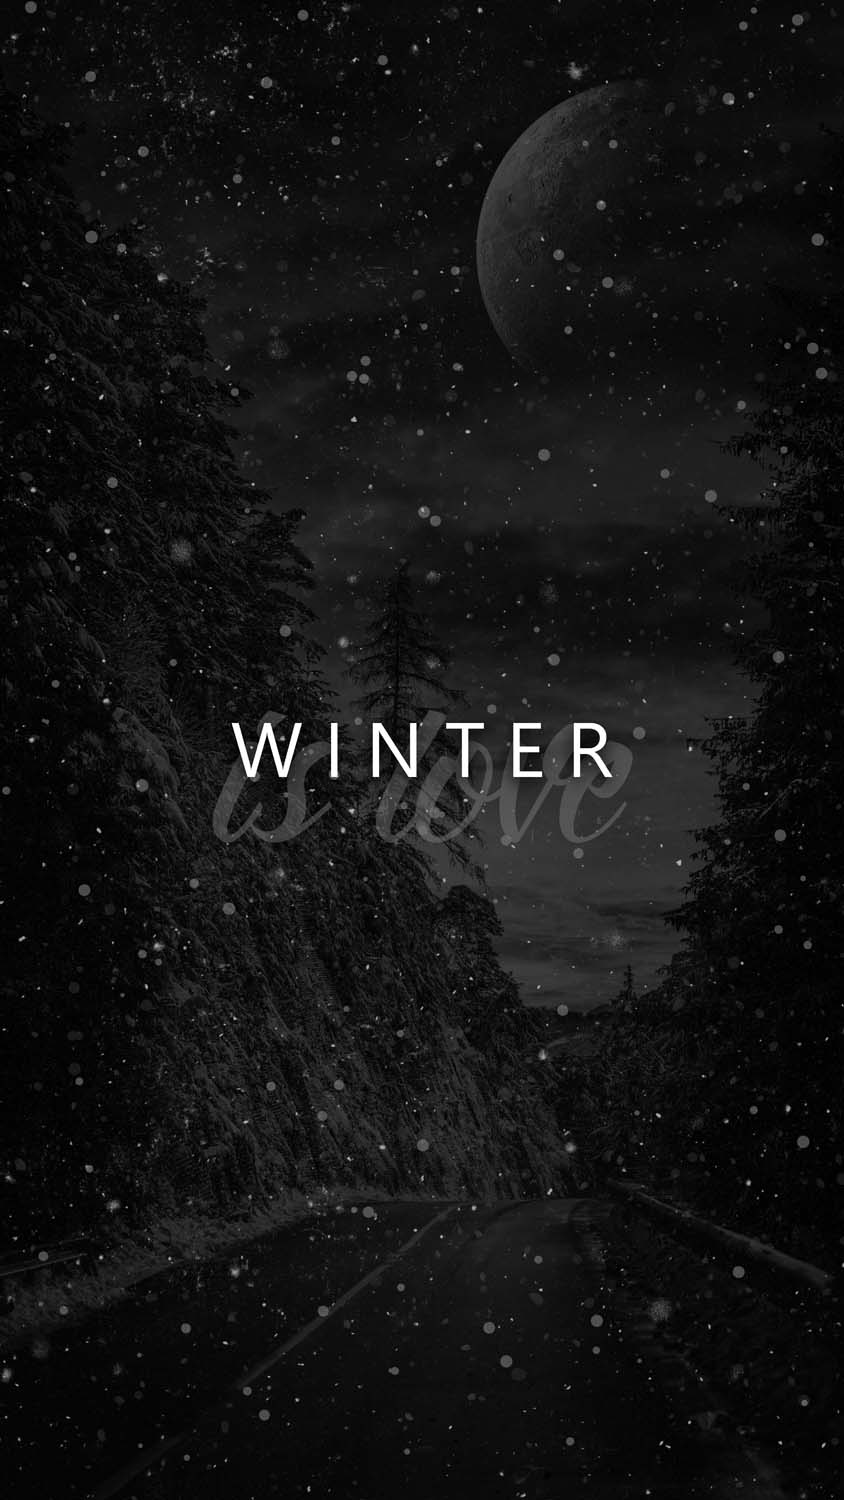 Winter is Love iPhone Wallpaper HD